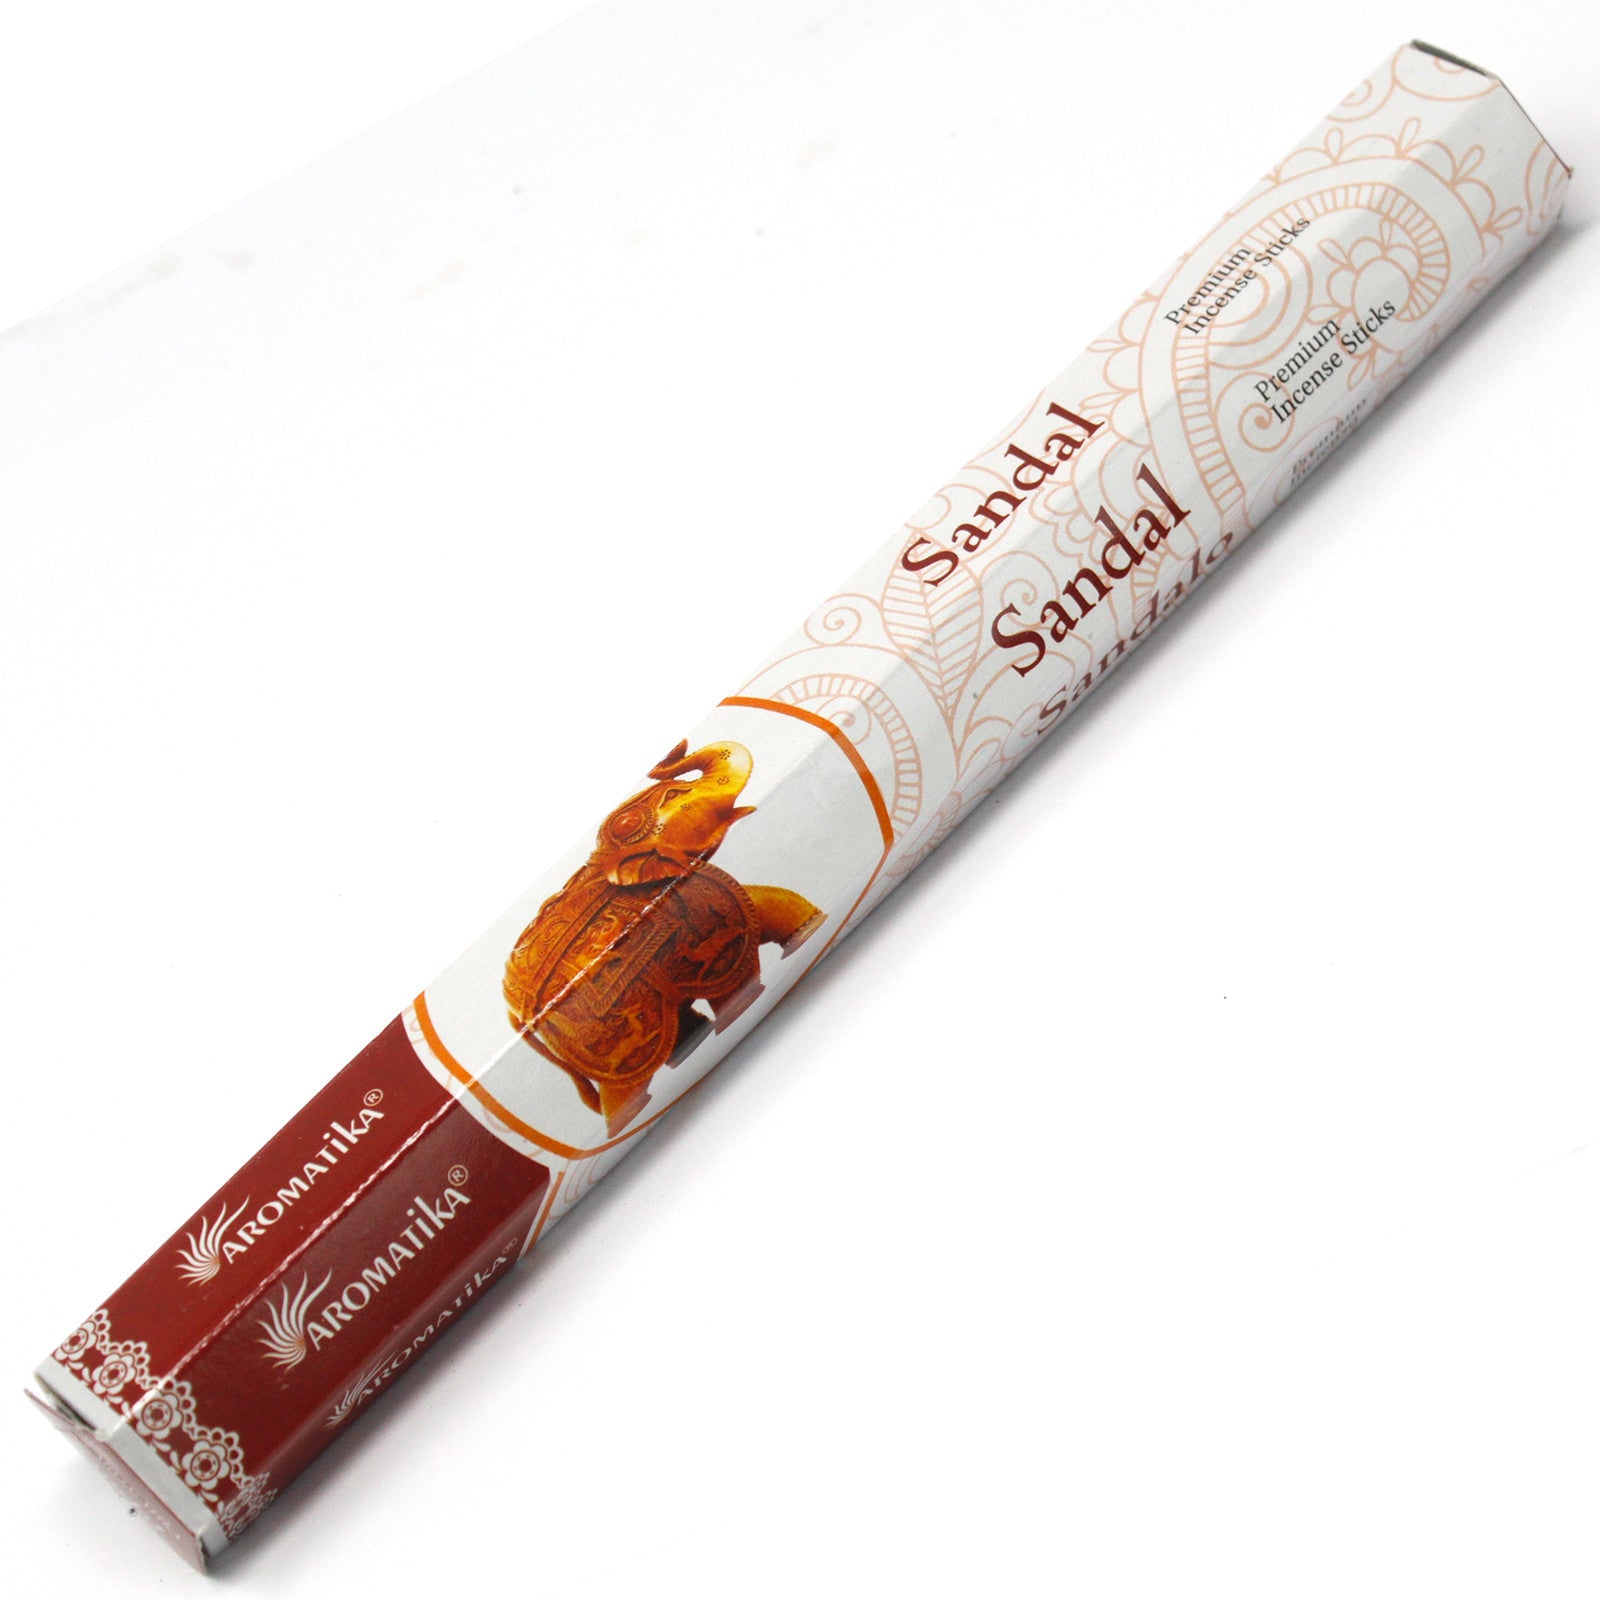 Sandalwood Premium Incense - Single Pack of 20